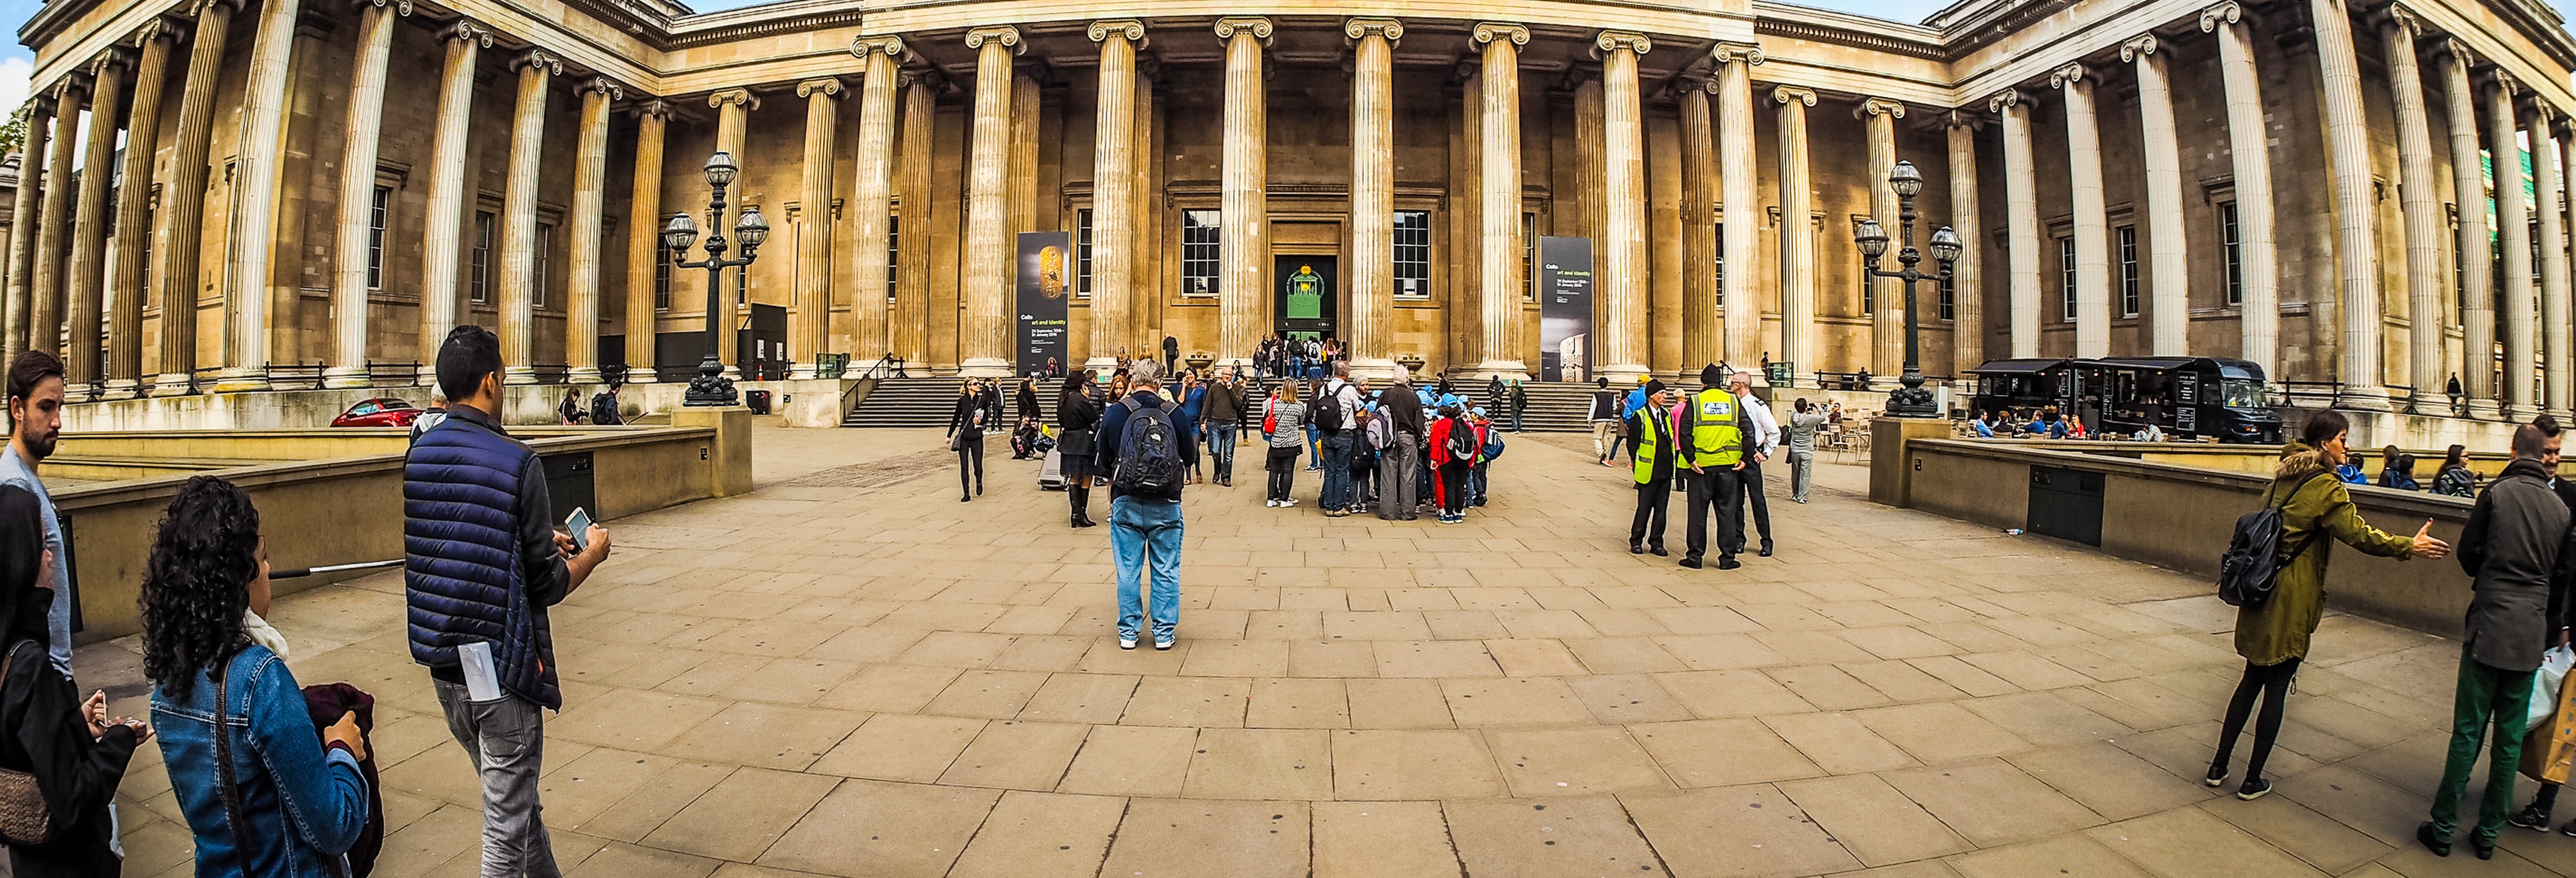 Visita guiada pelo British Museum